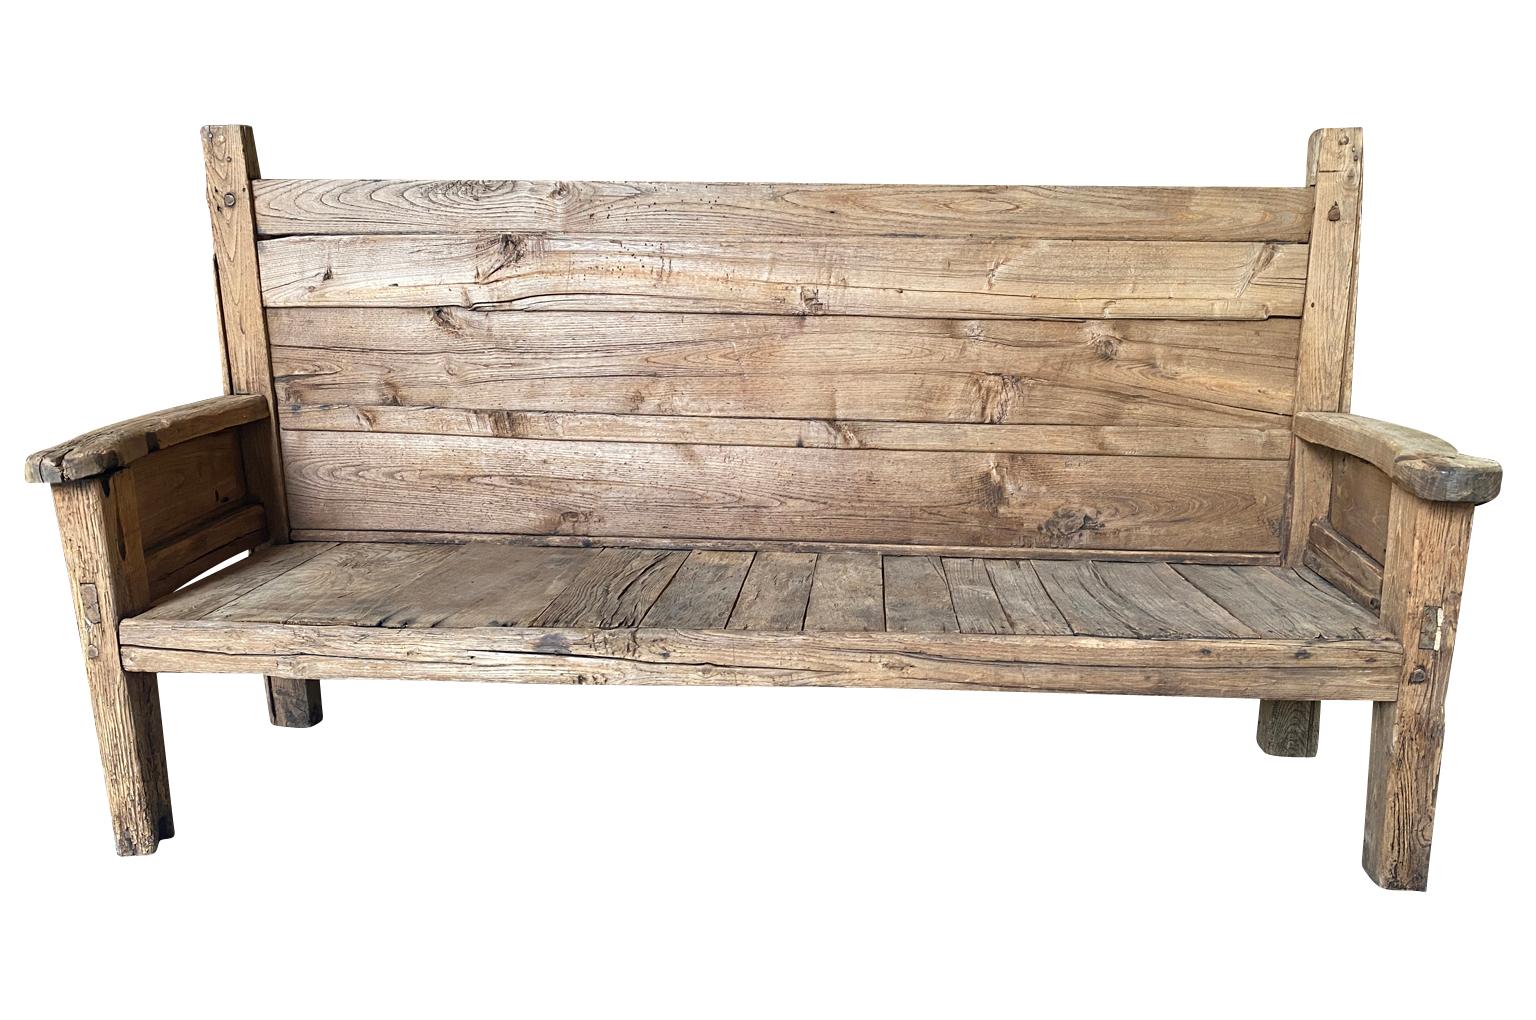 Spanish 17th Century Rustic Bench In Good Condition For Sale In Atlanta, GA